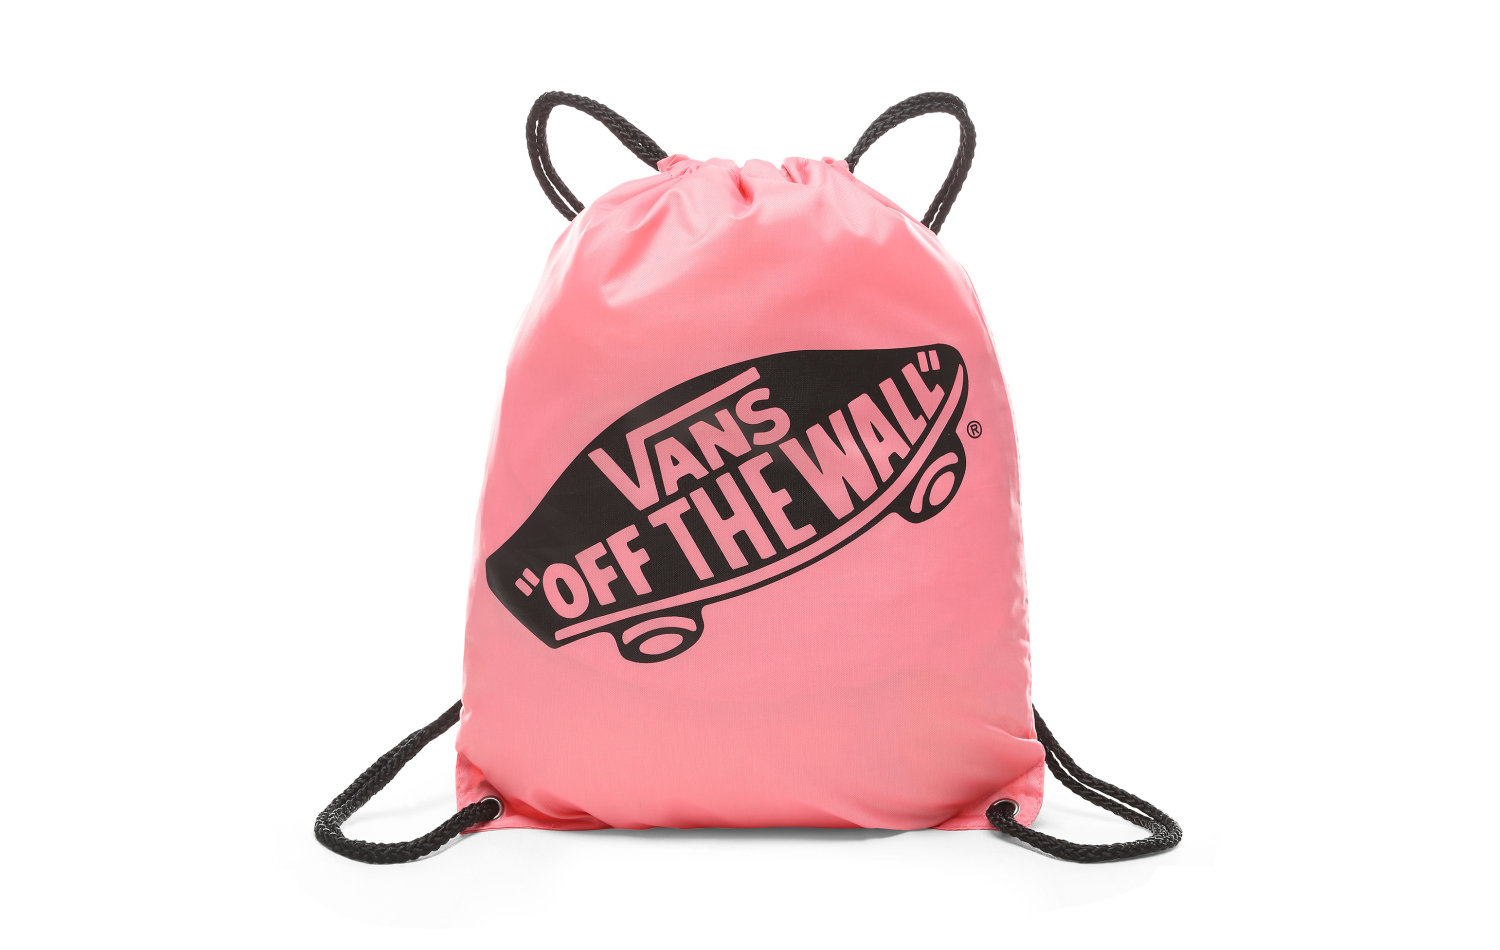 kupiti online novi koncept veliki izbor vans táska pink -  randysbrochuredelivery.com